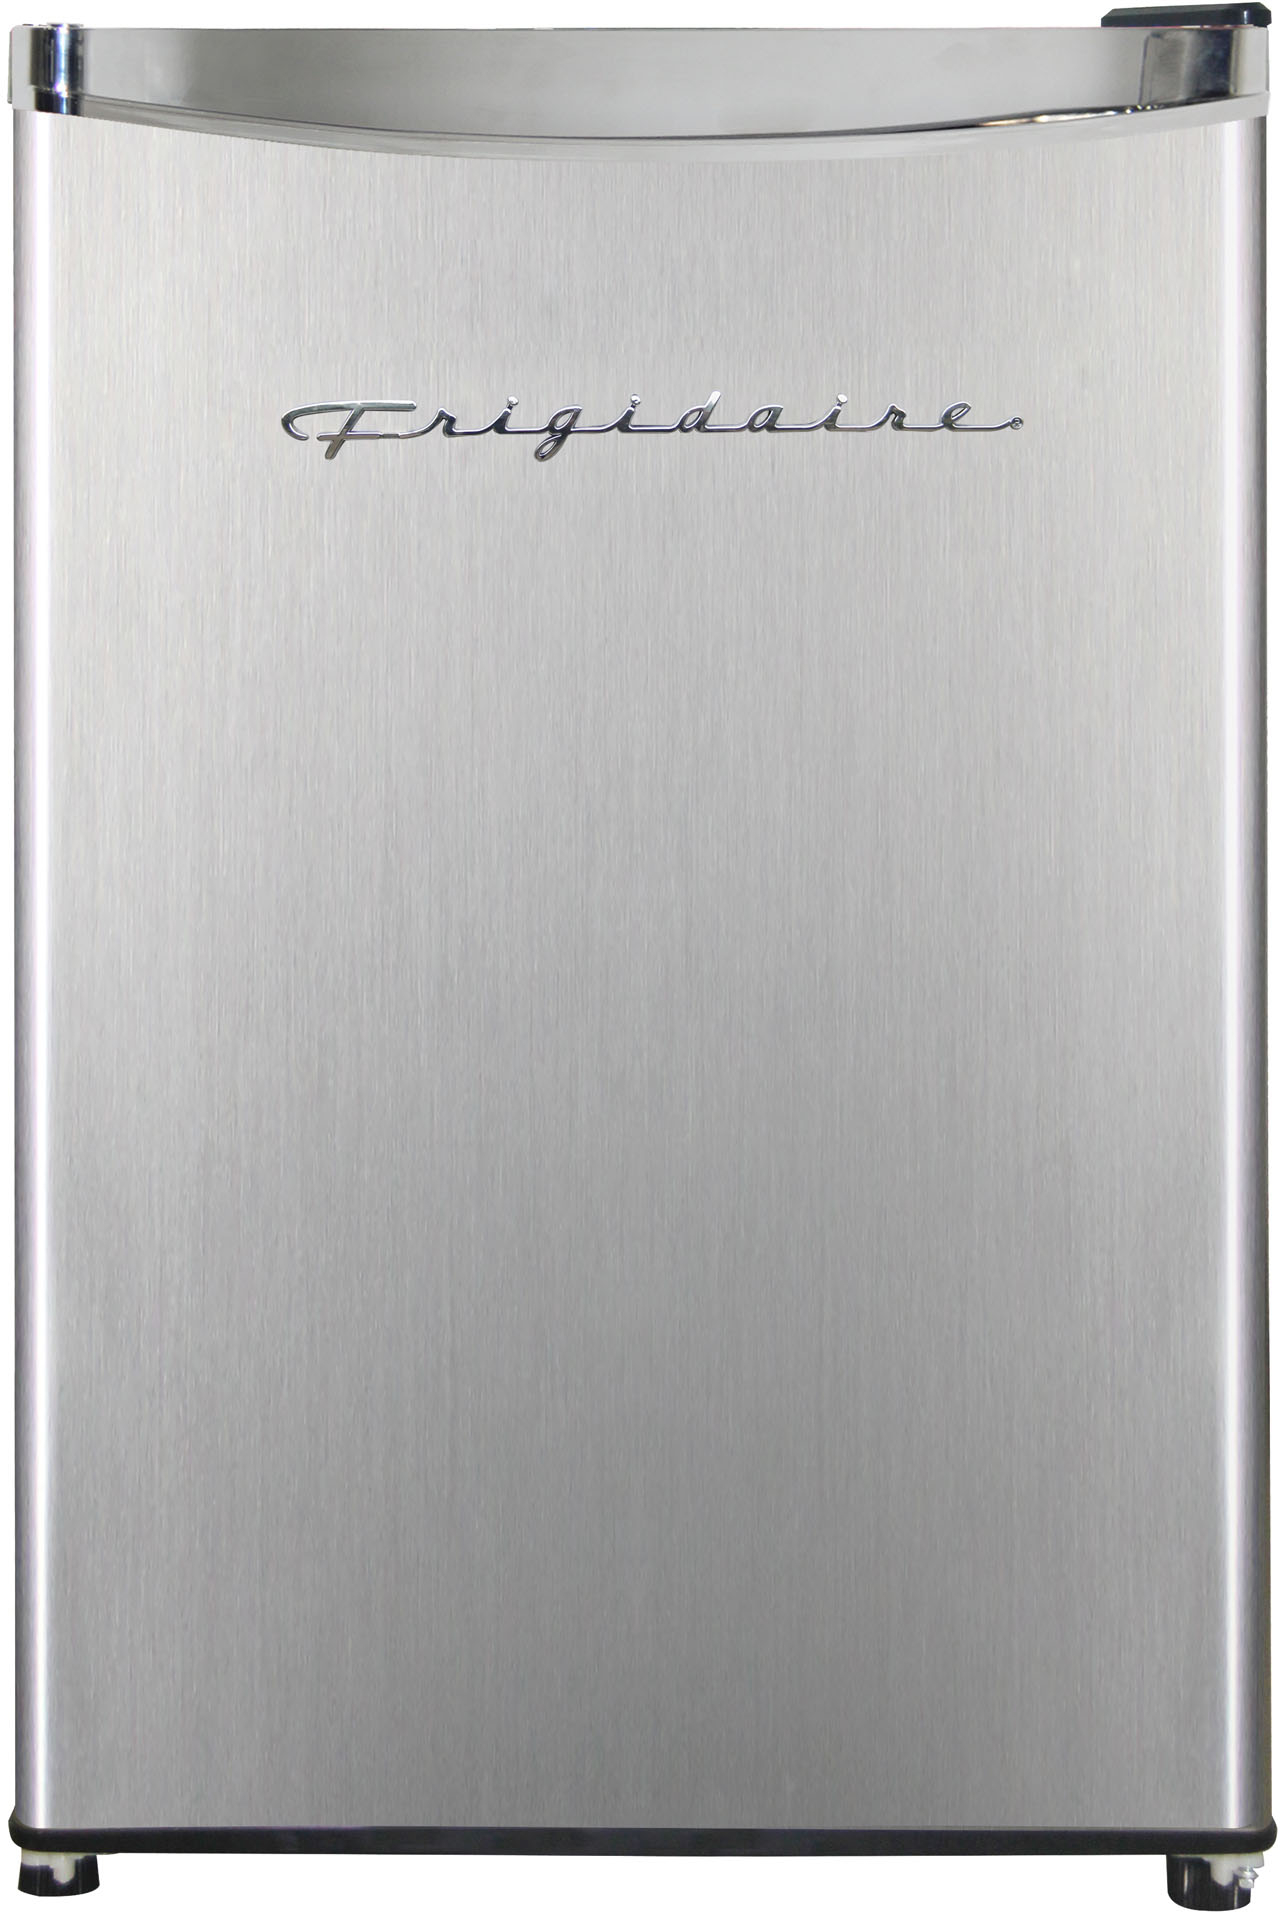 Frigidaire 3.2 Cu. Ft. Single Door Retro Compact Refrigerator